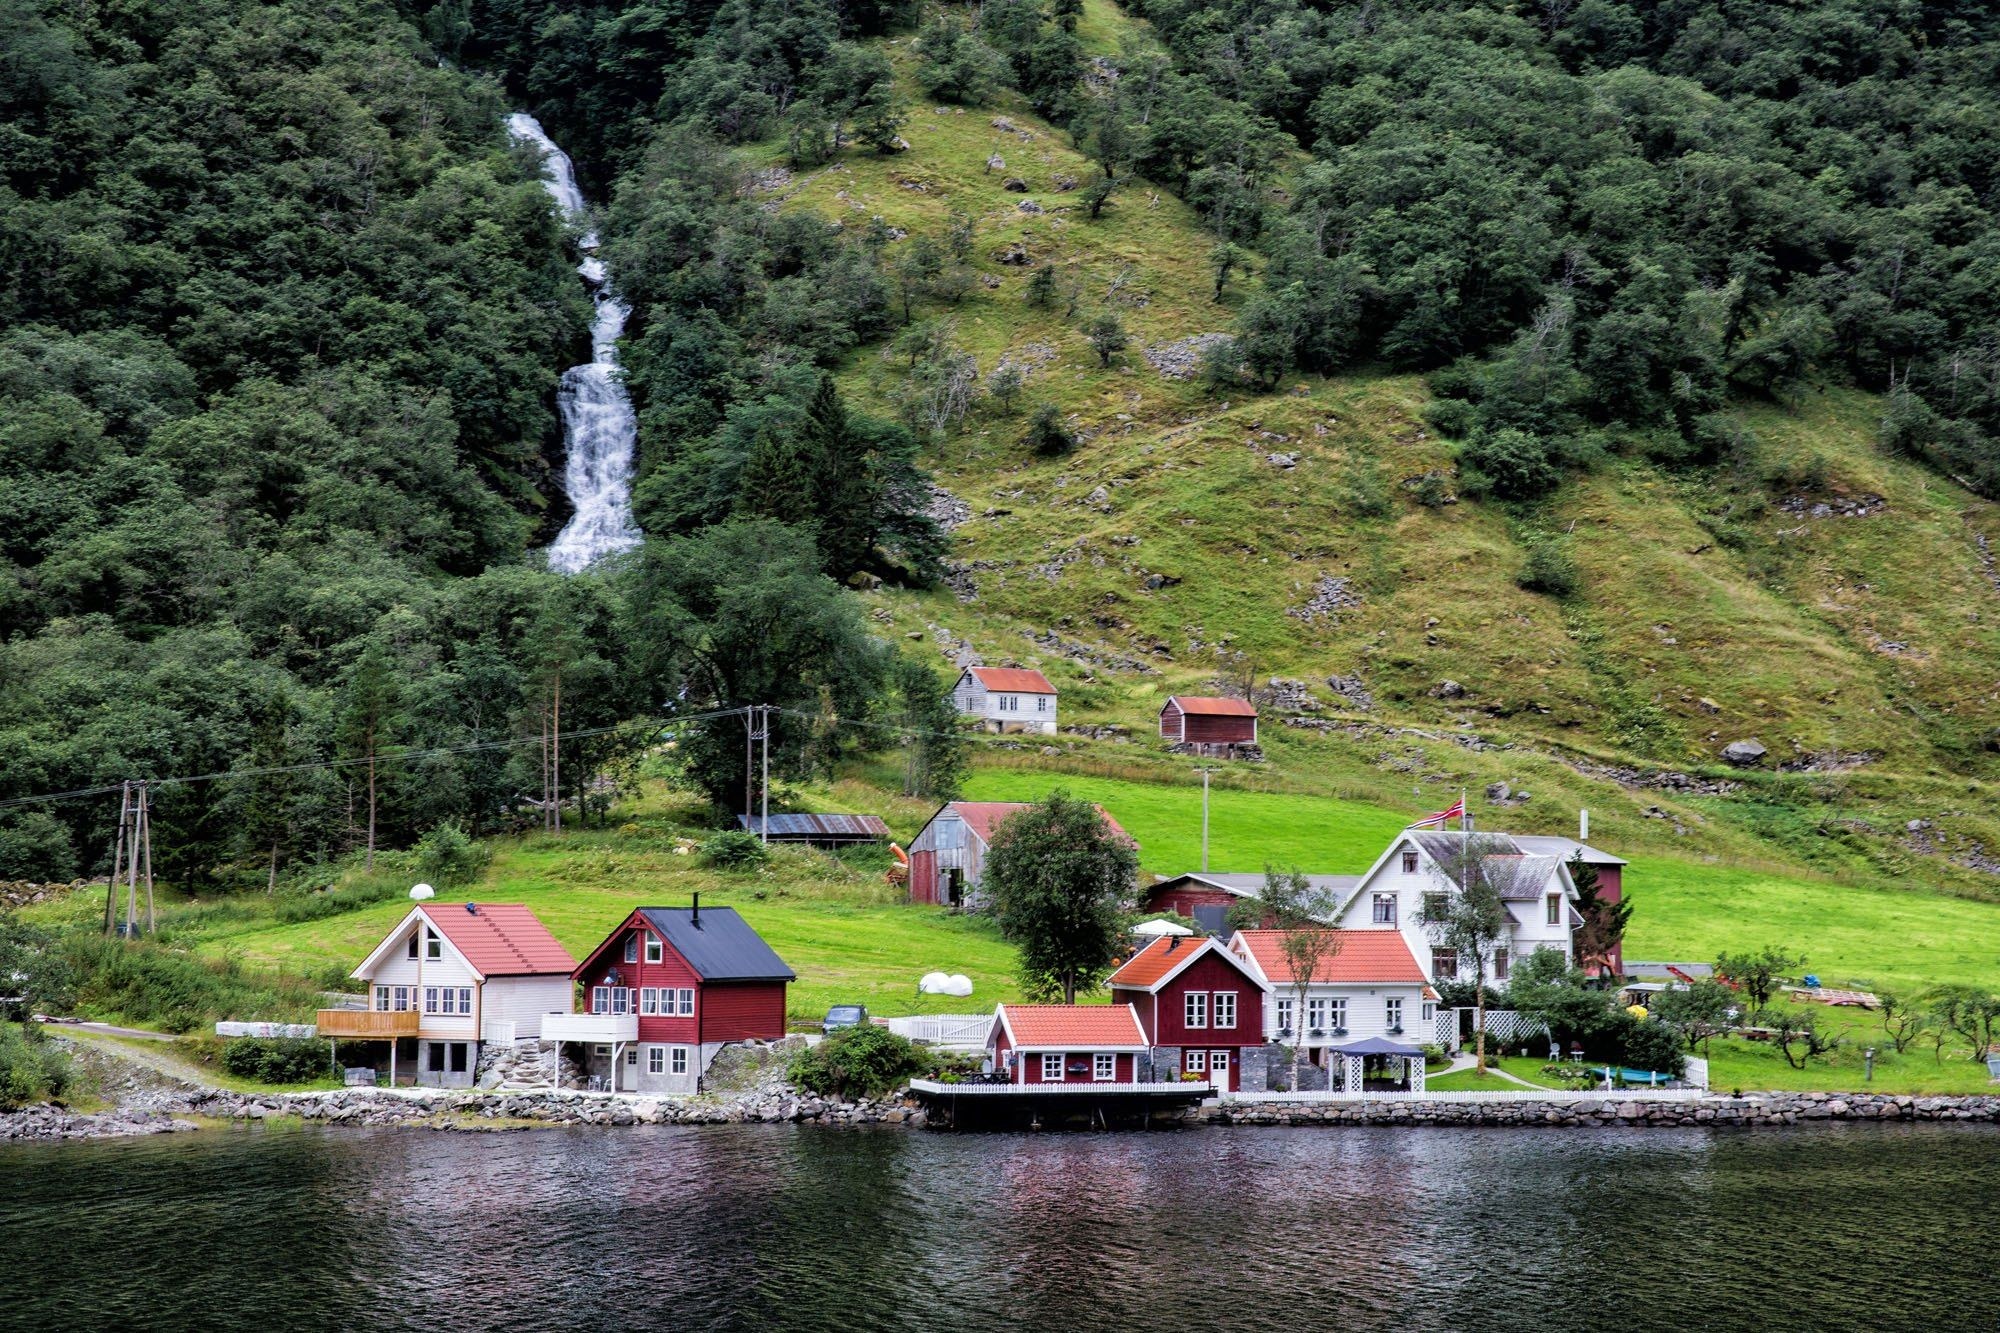 Интернет в норвегии. Деревня Маура Норвегия. Норвегия фьорды деревня. Норвежская деревня ноусвог. Деревня в Норвегии гри.